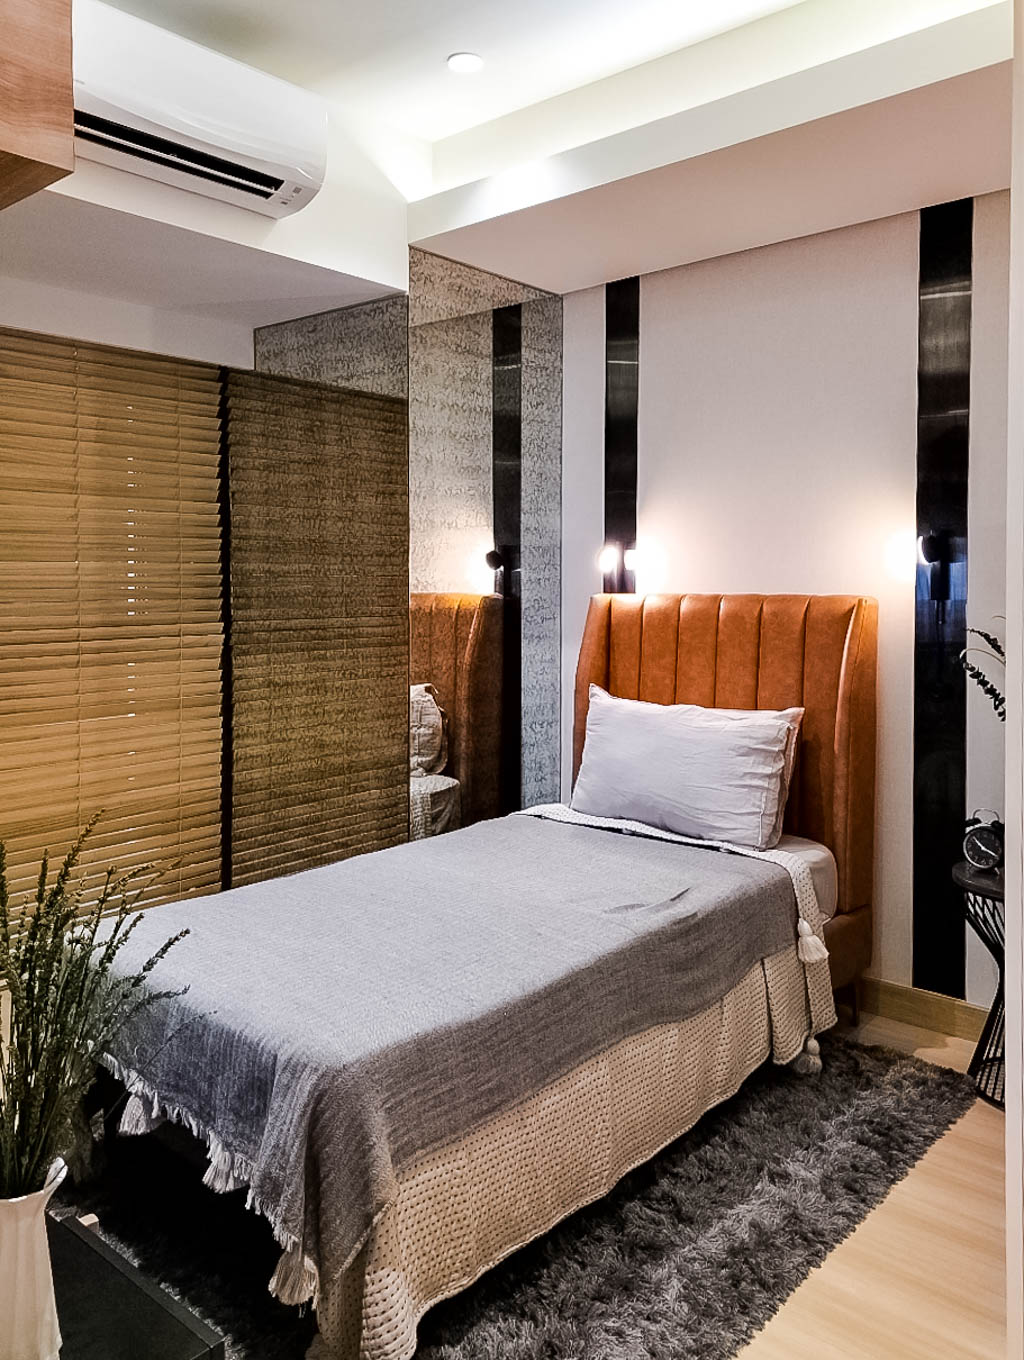 SRD60A3 2 Bedroom Condo for Sale in Cebu Business Park - 9